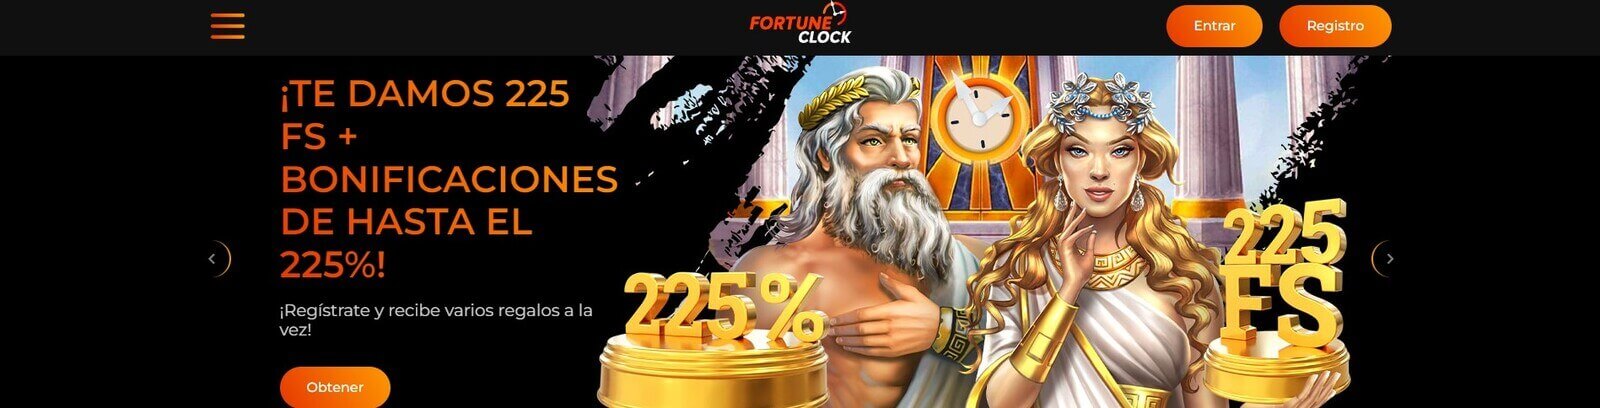 Página web de casino Fortune Clock